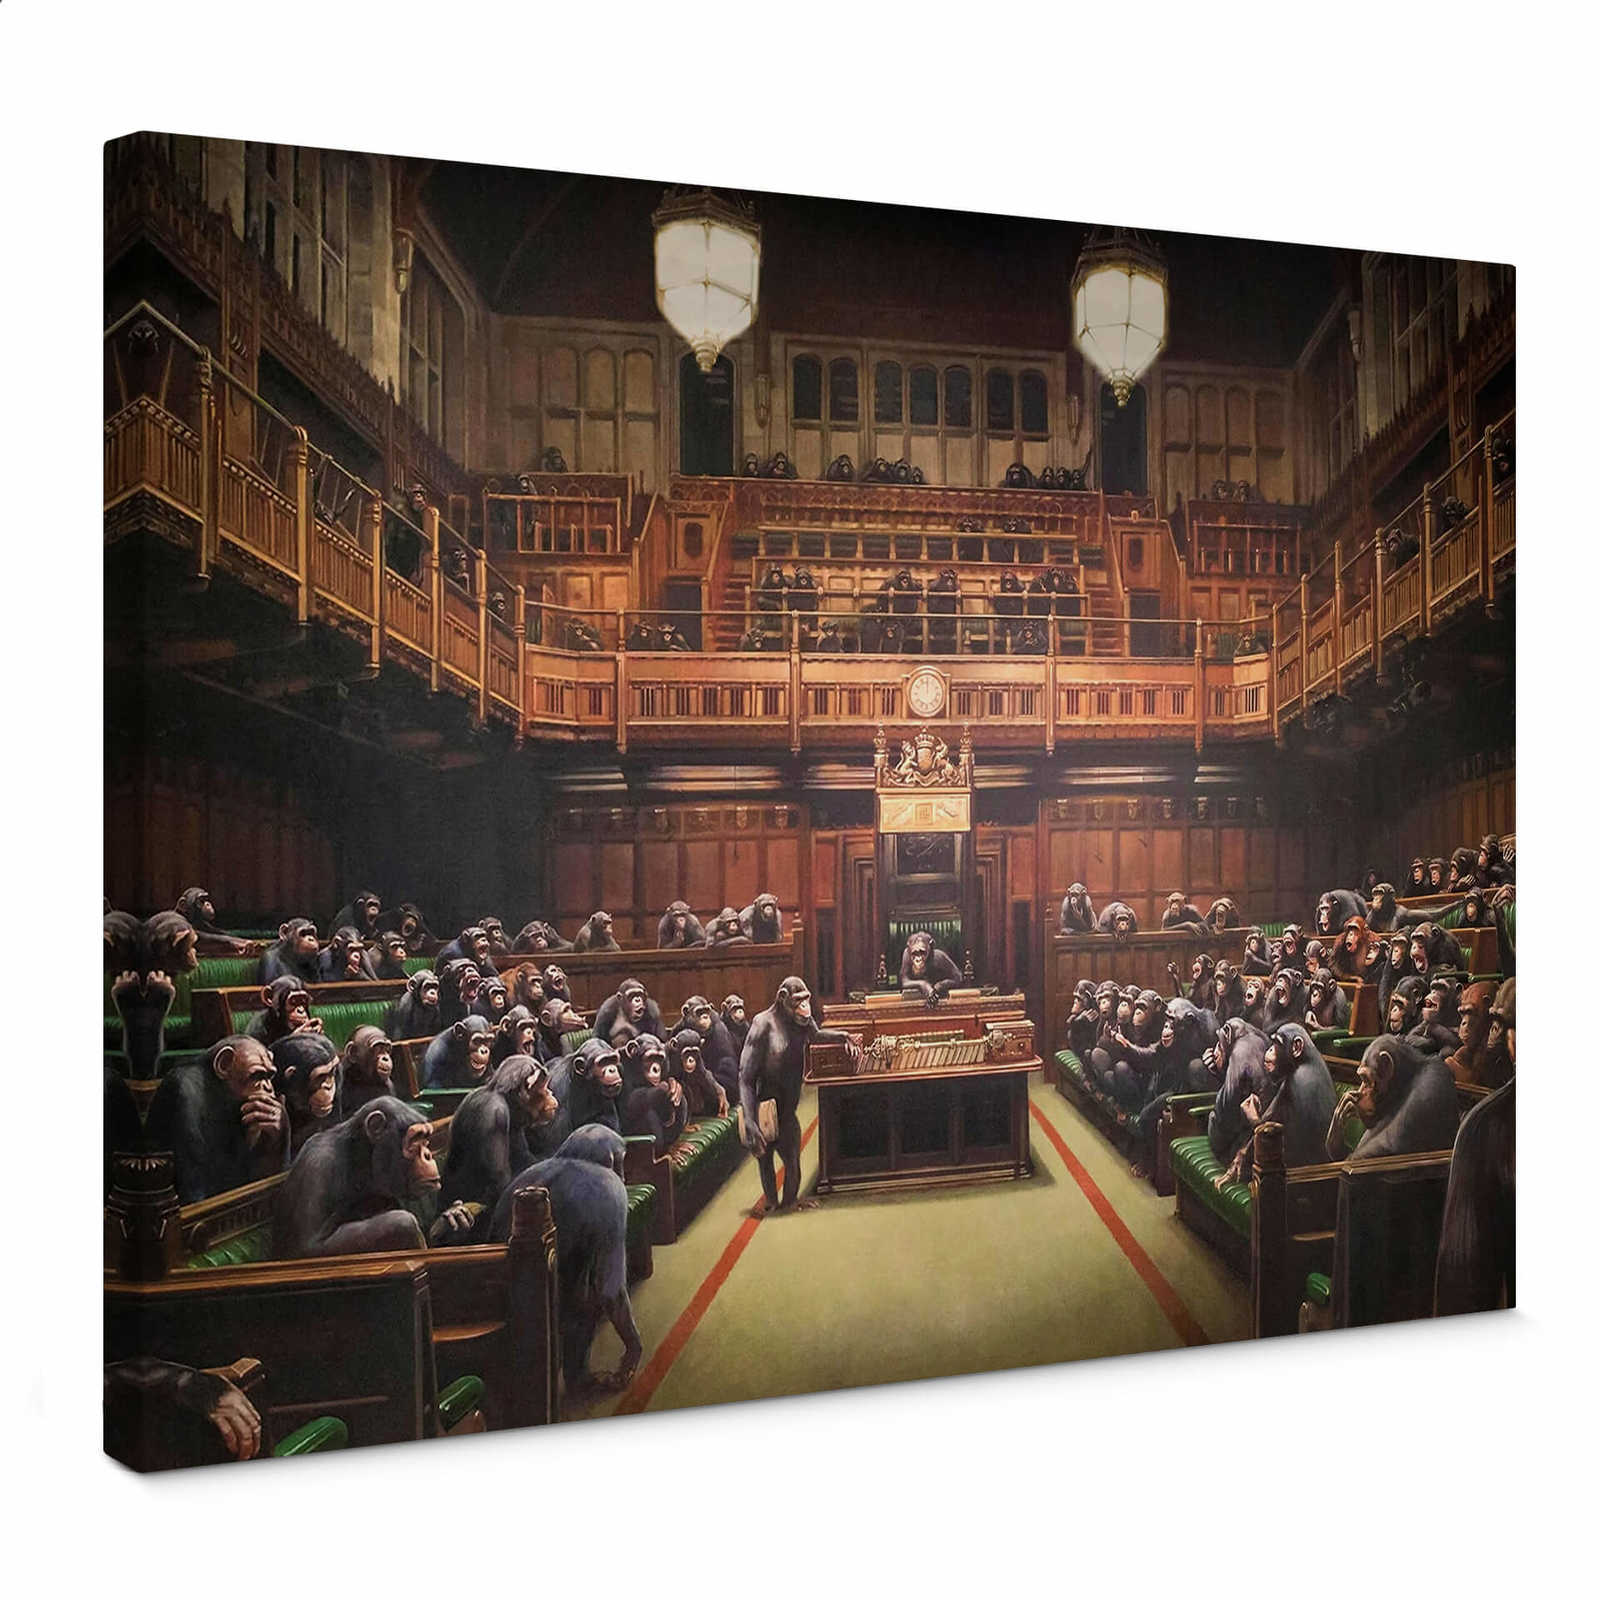         Canvas print Banksy "Devolved Parliament" painting
    